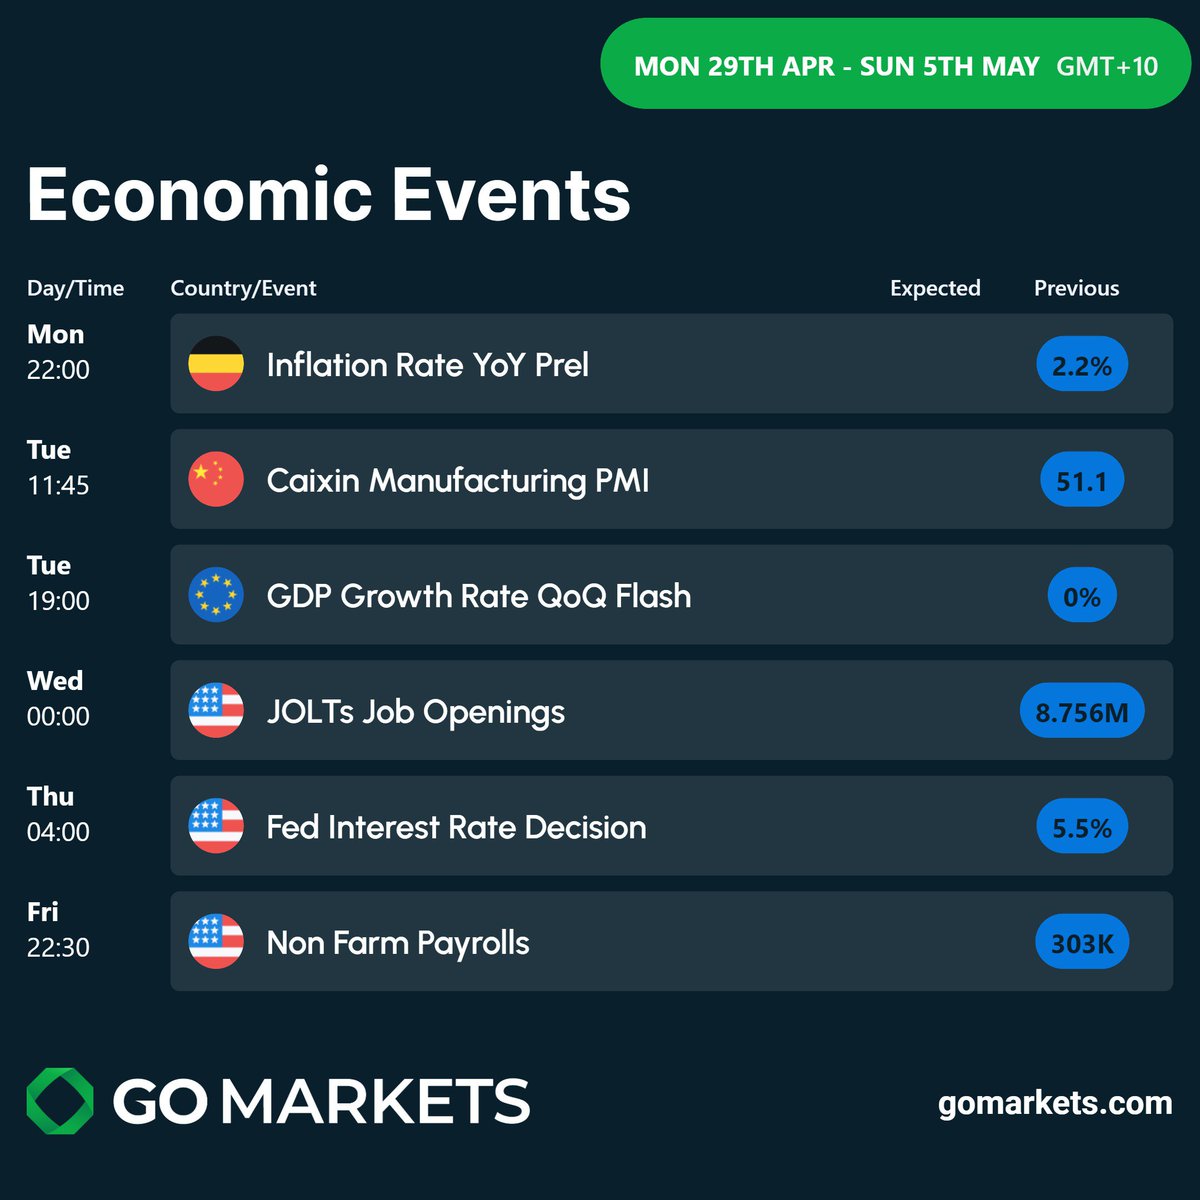 🔴 𝗞𝗲𝘆 𝗘𝗰𝗼𝗻𝗼𝗺𝗶𝗰 𝗘𝘃𝗲𝗻𝘁𝘀 𝘁𝗼 𝘄𝗮𝘁𝗰𝗵 𝘁𝗵𝗶𝘀 𝘄𝗲𝗲𝗸 𝗚𝗠𝗧+𝟭𝟬 Stay up to date on global markets >> gomarkets.com/au/economic-ca… #MarketMovers #EconomicCalendar #gomarkets